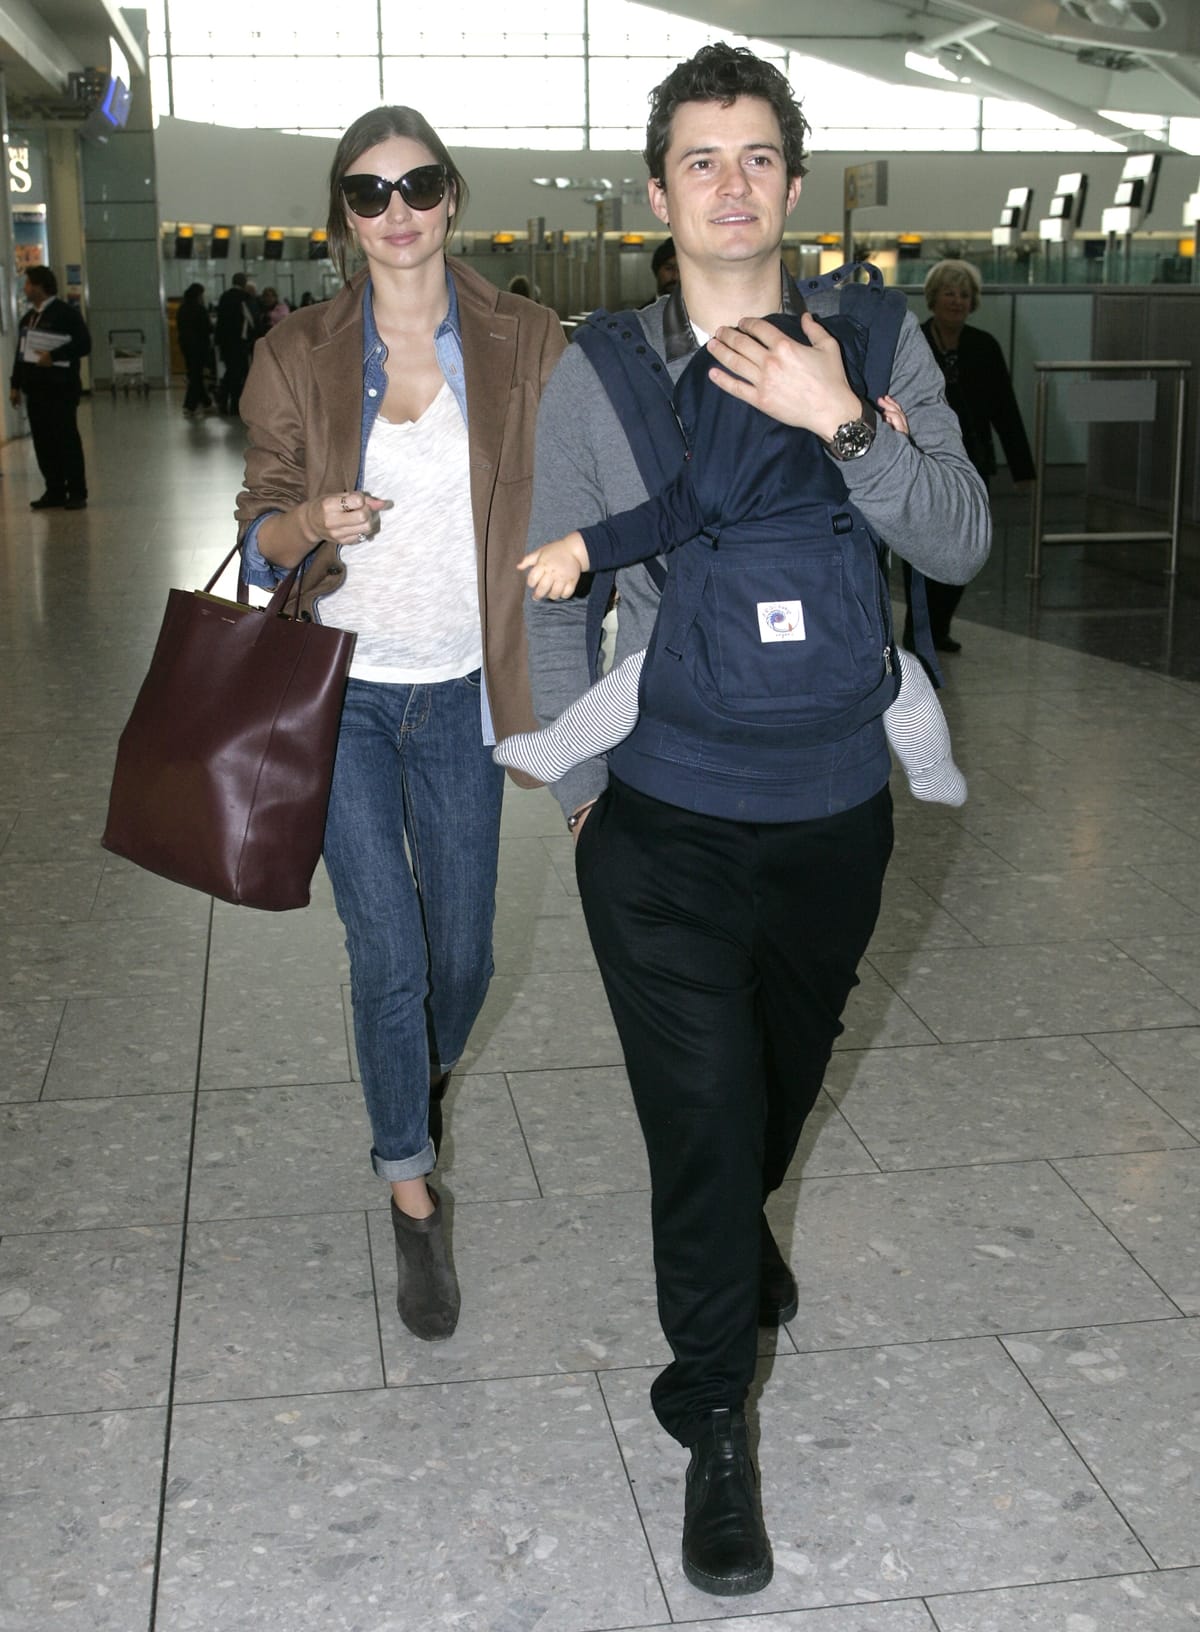 Miranda Kerr and hubby Orlando Bloom bring their son, Flynn, to Heathrow Airport